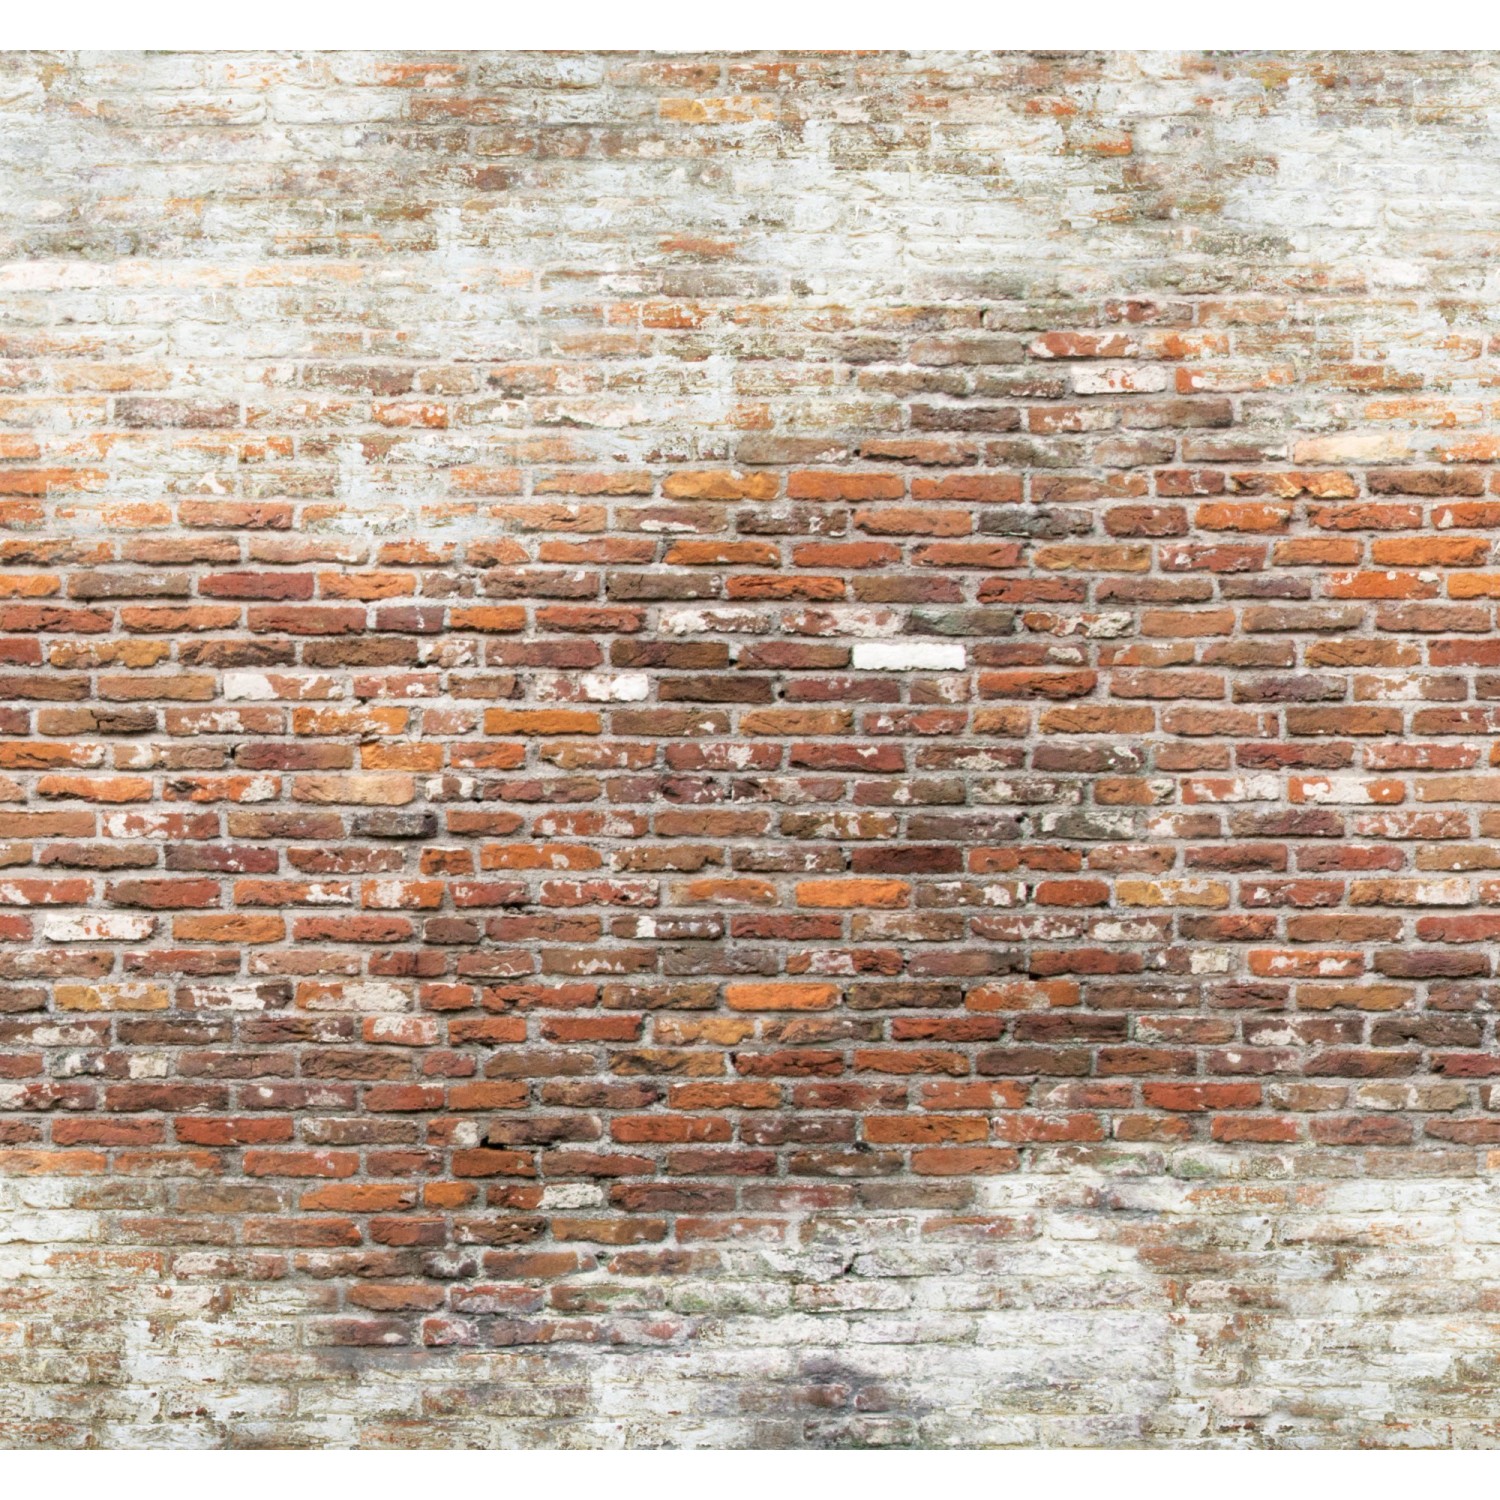 Art for the Home Fototapete Brick wall 2 280 x 300 cm